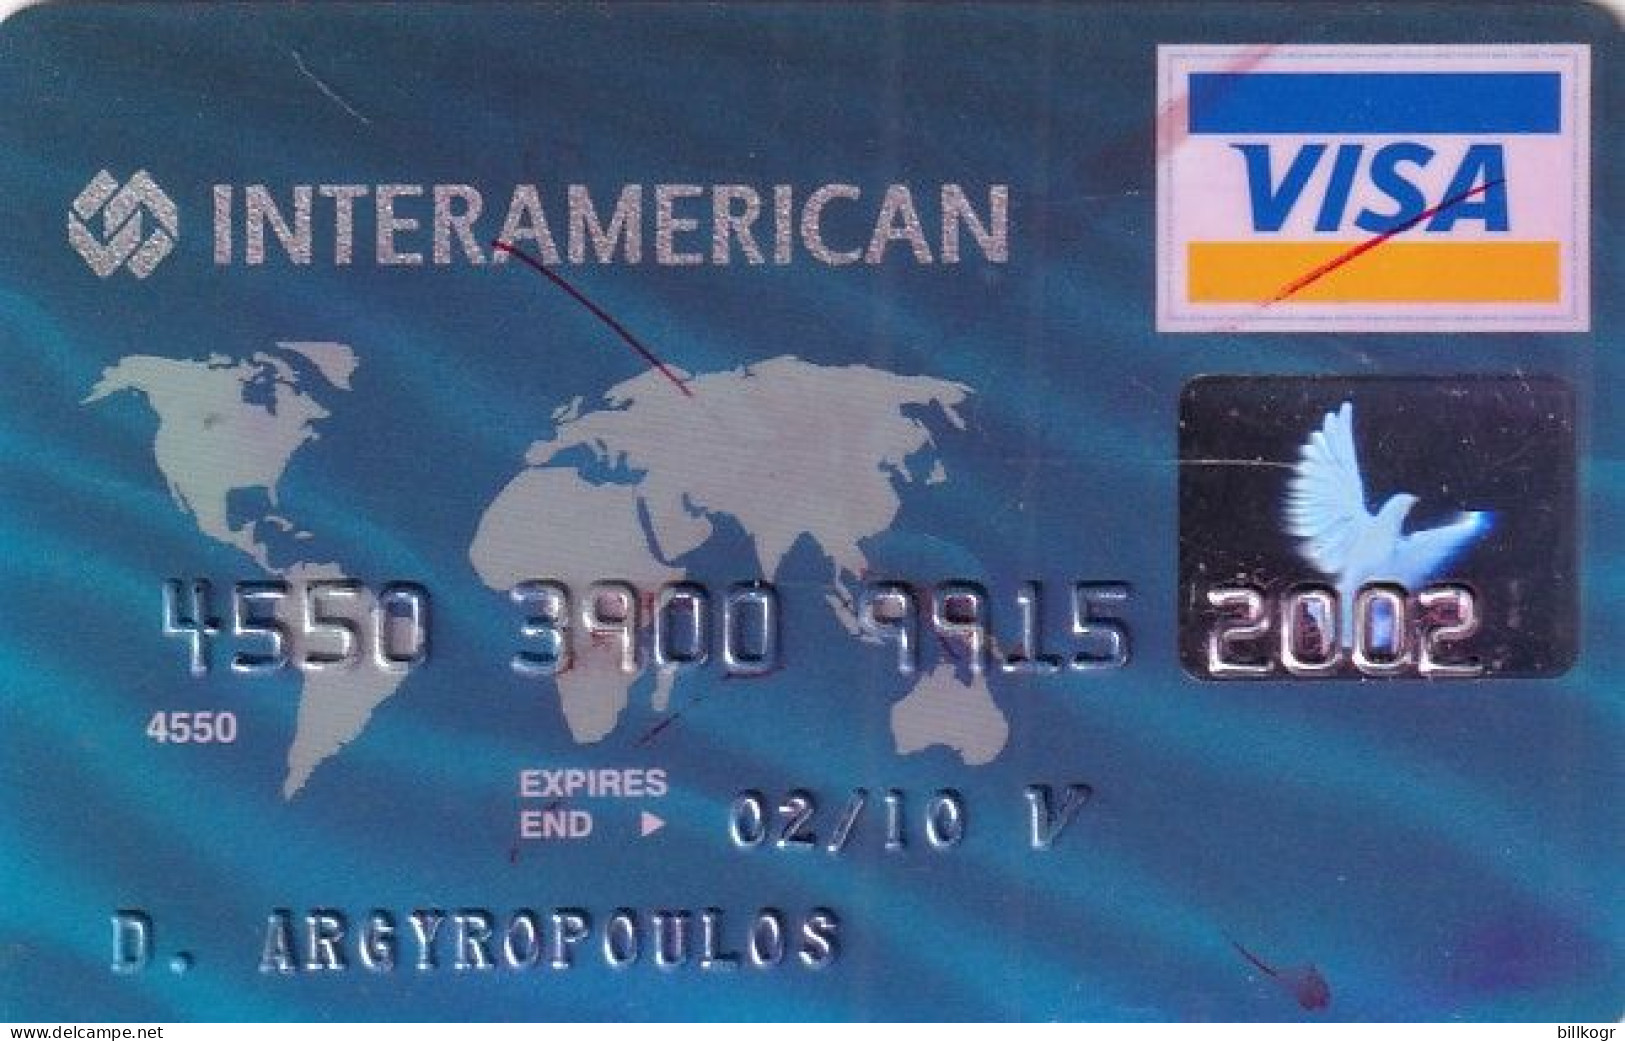 GREECE - Interamerican, EFG Eurobank Ergasias Visa, 05/04, Used - Cartes De Crédit (expiration Min. 10 Ans)